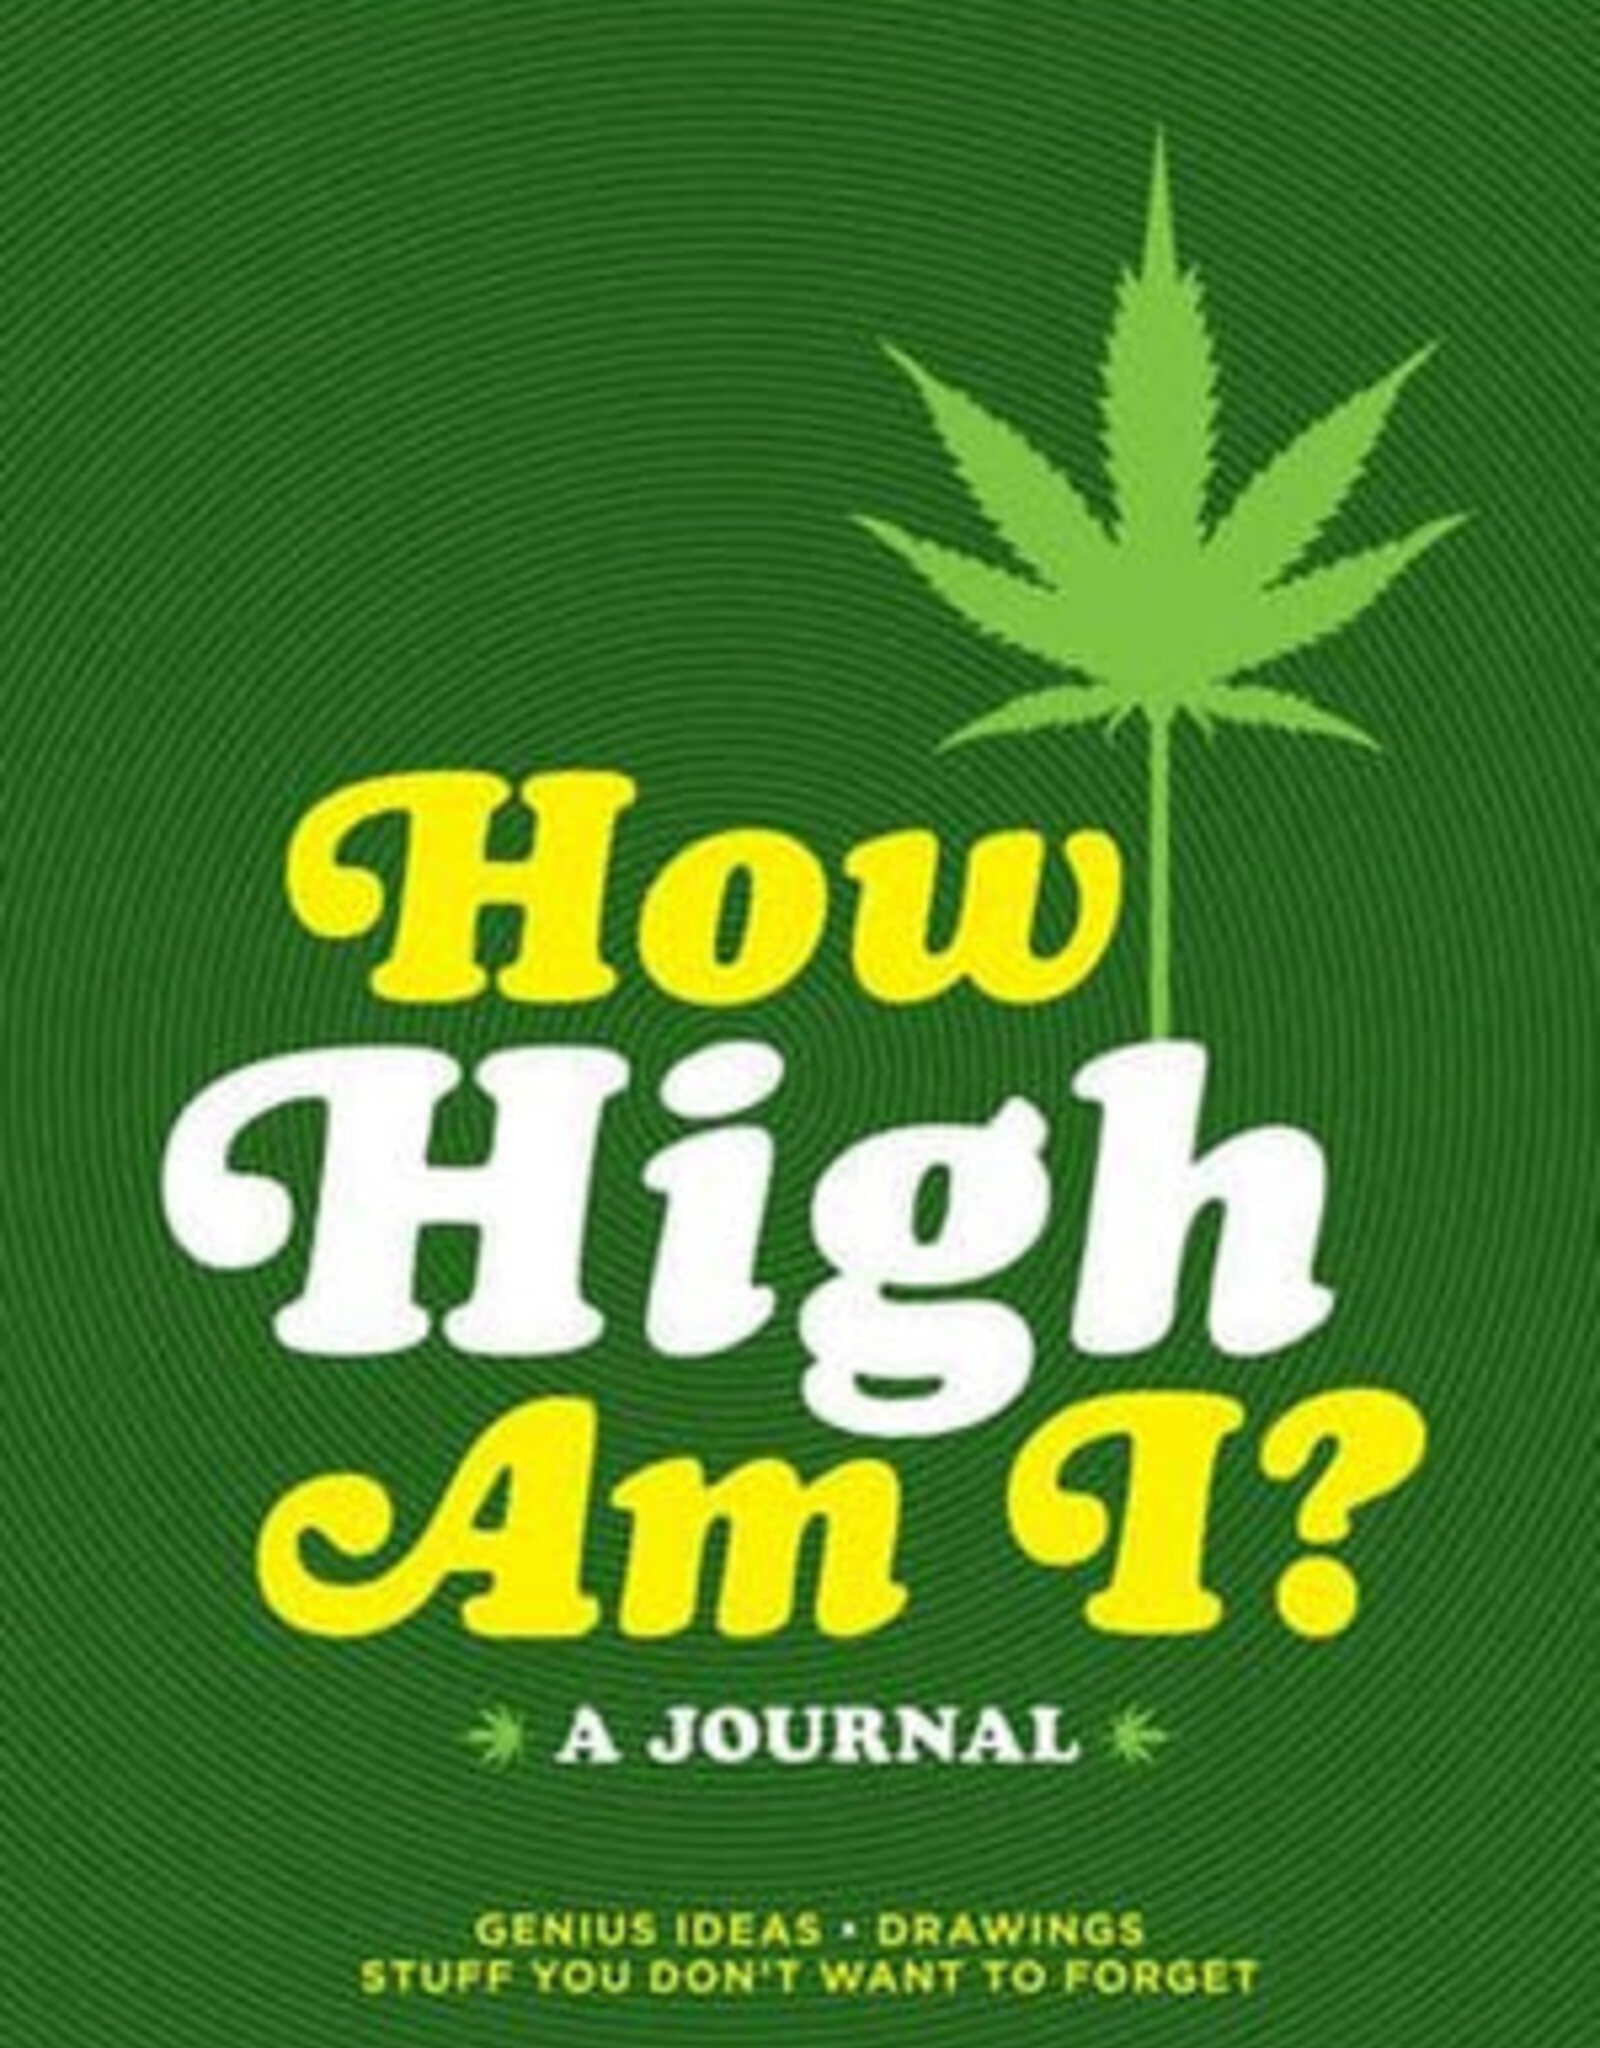 Chronicle Books How High Am I? Journal